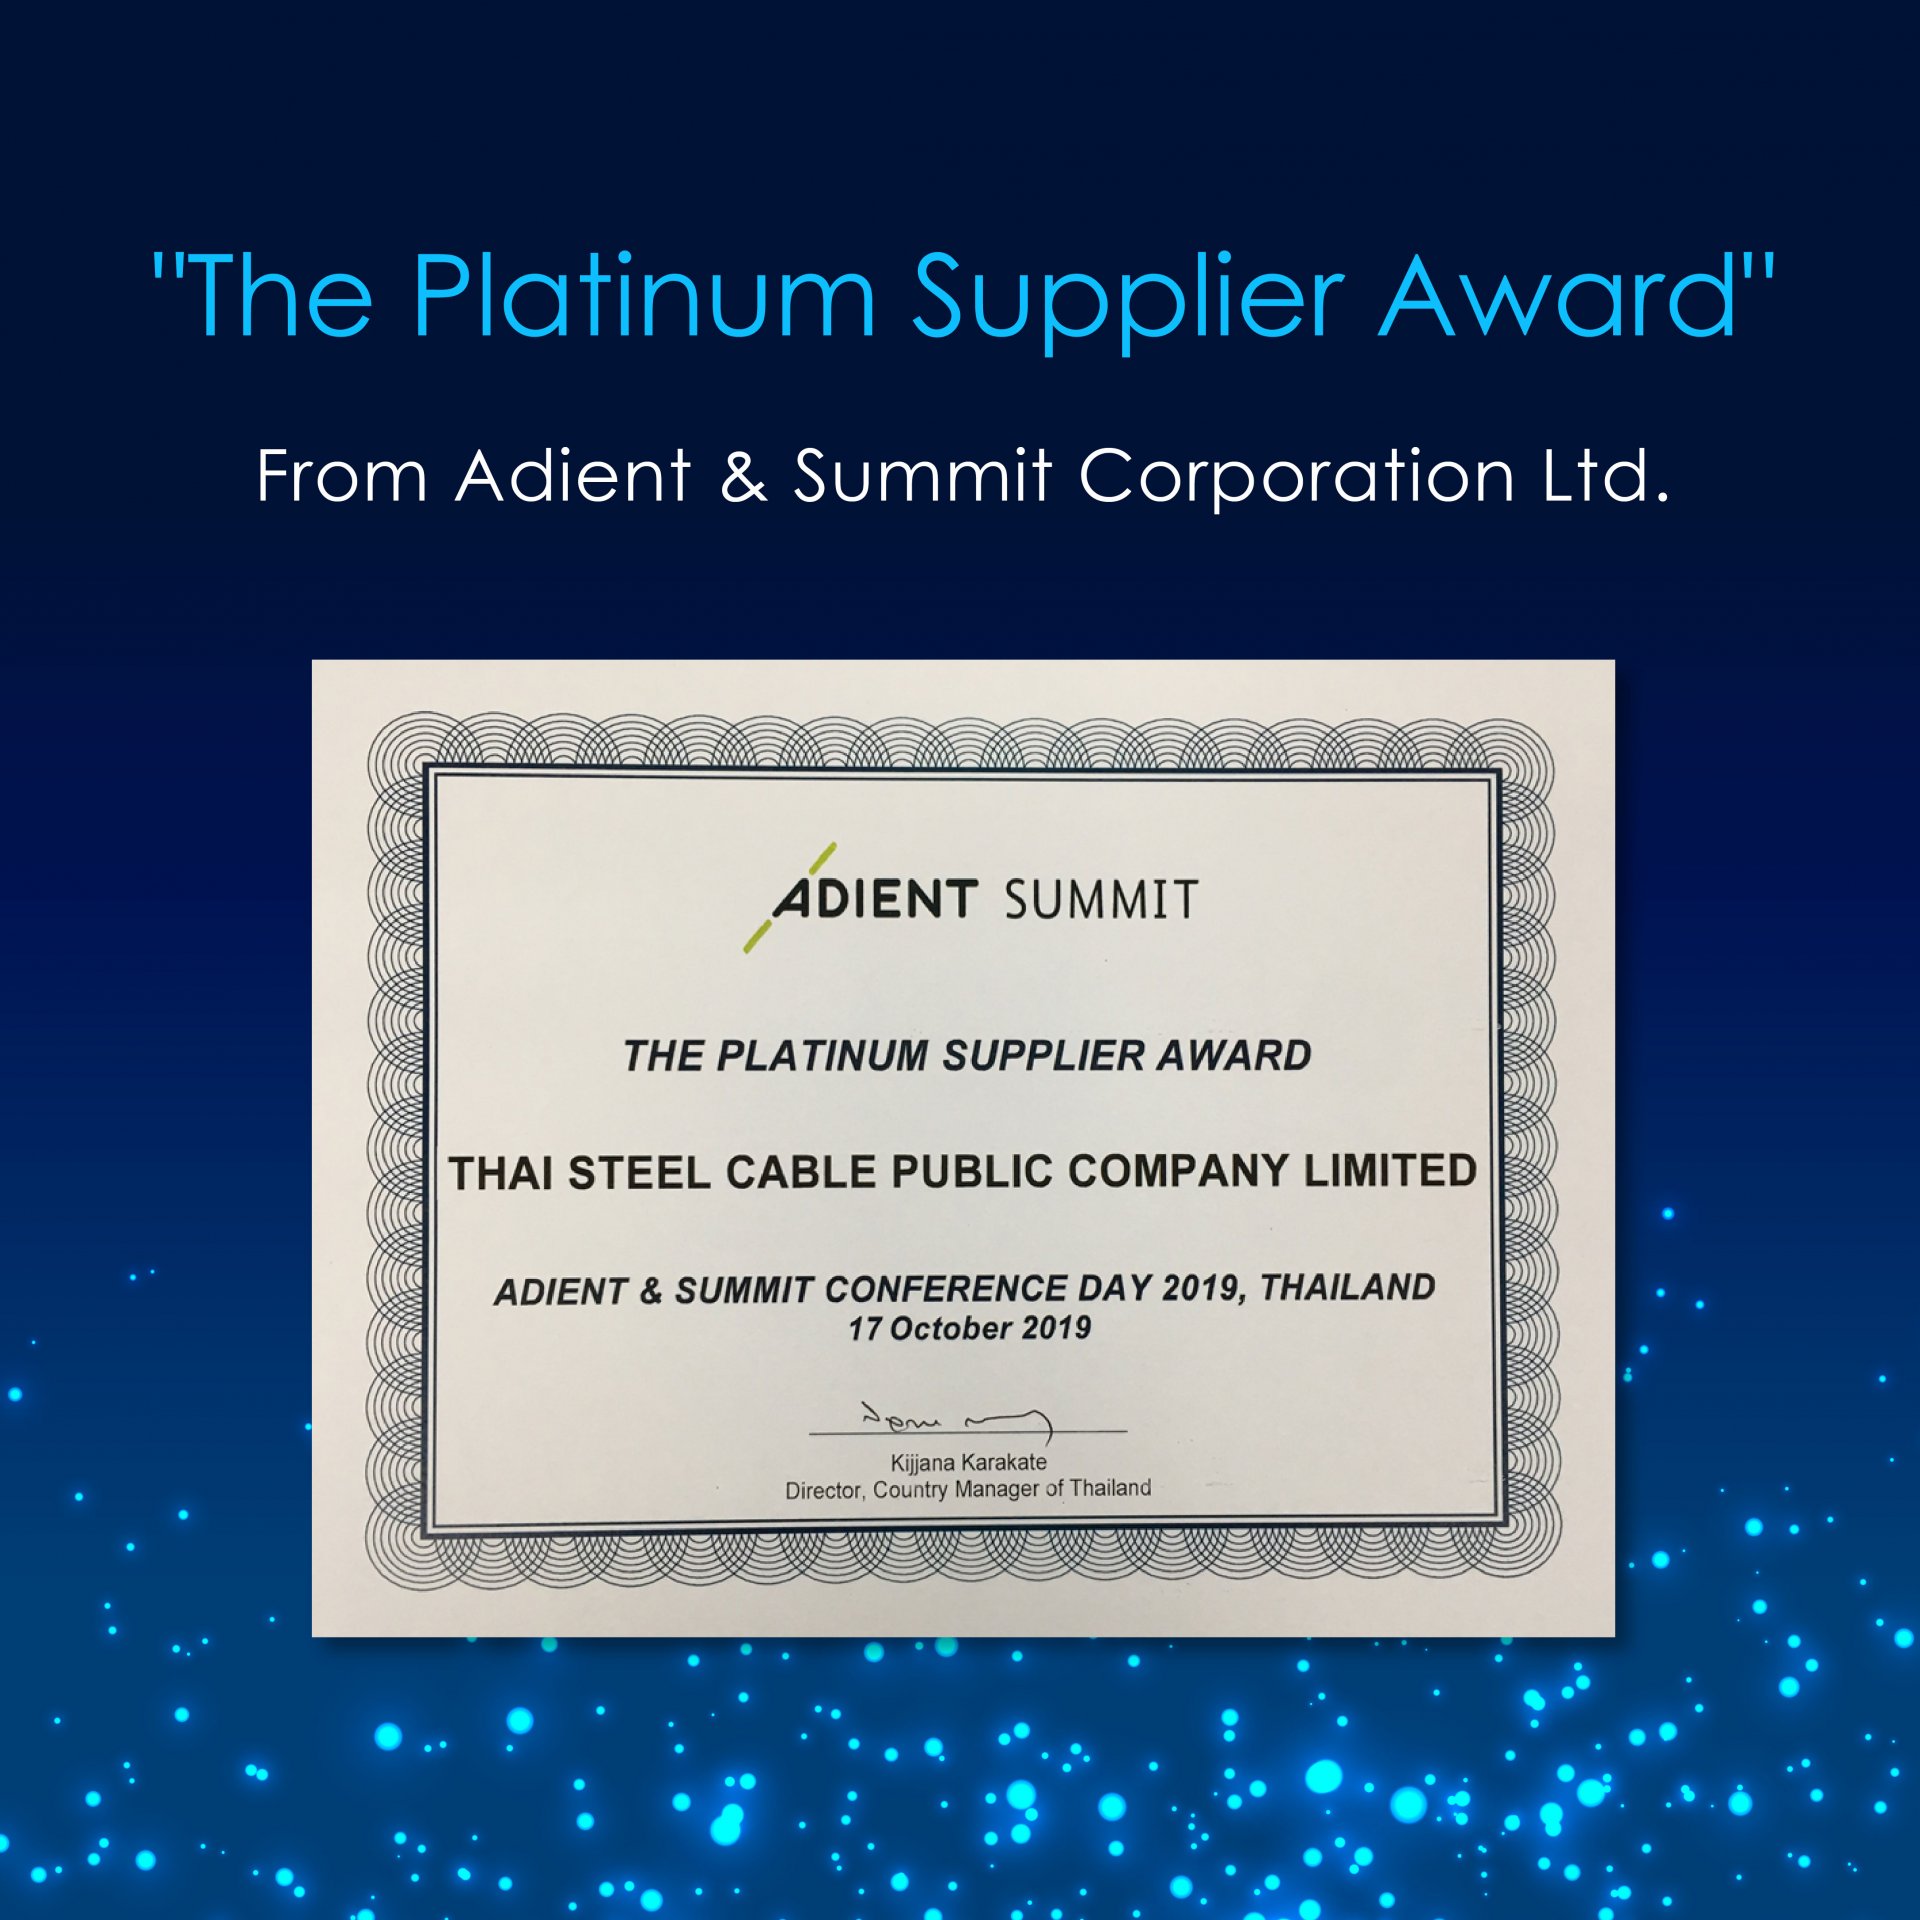 The Platinum Supplier Award